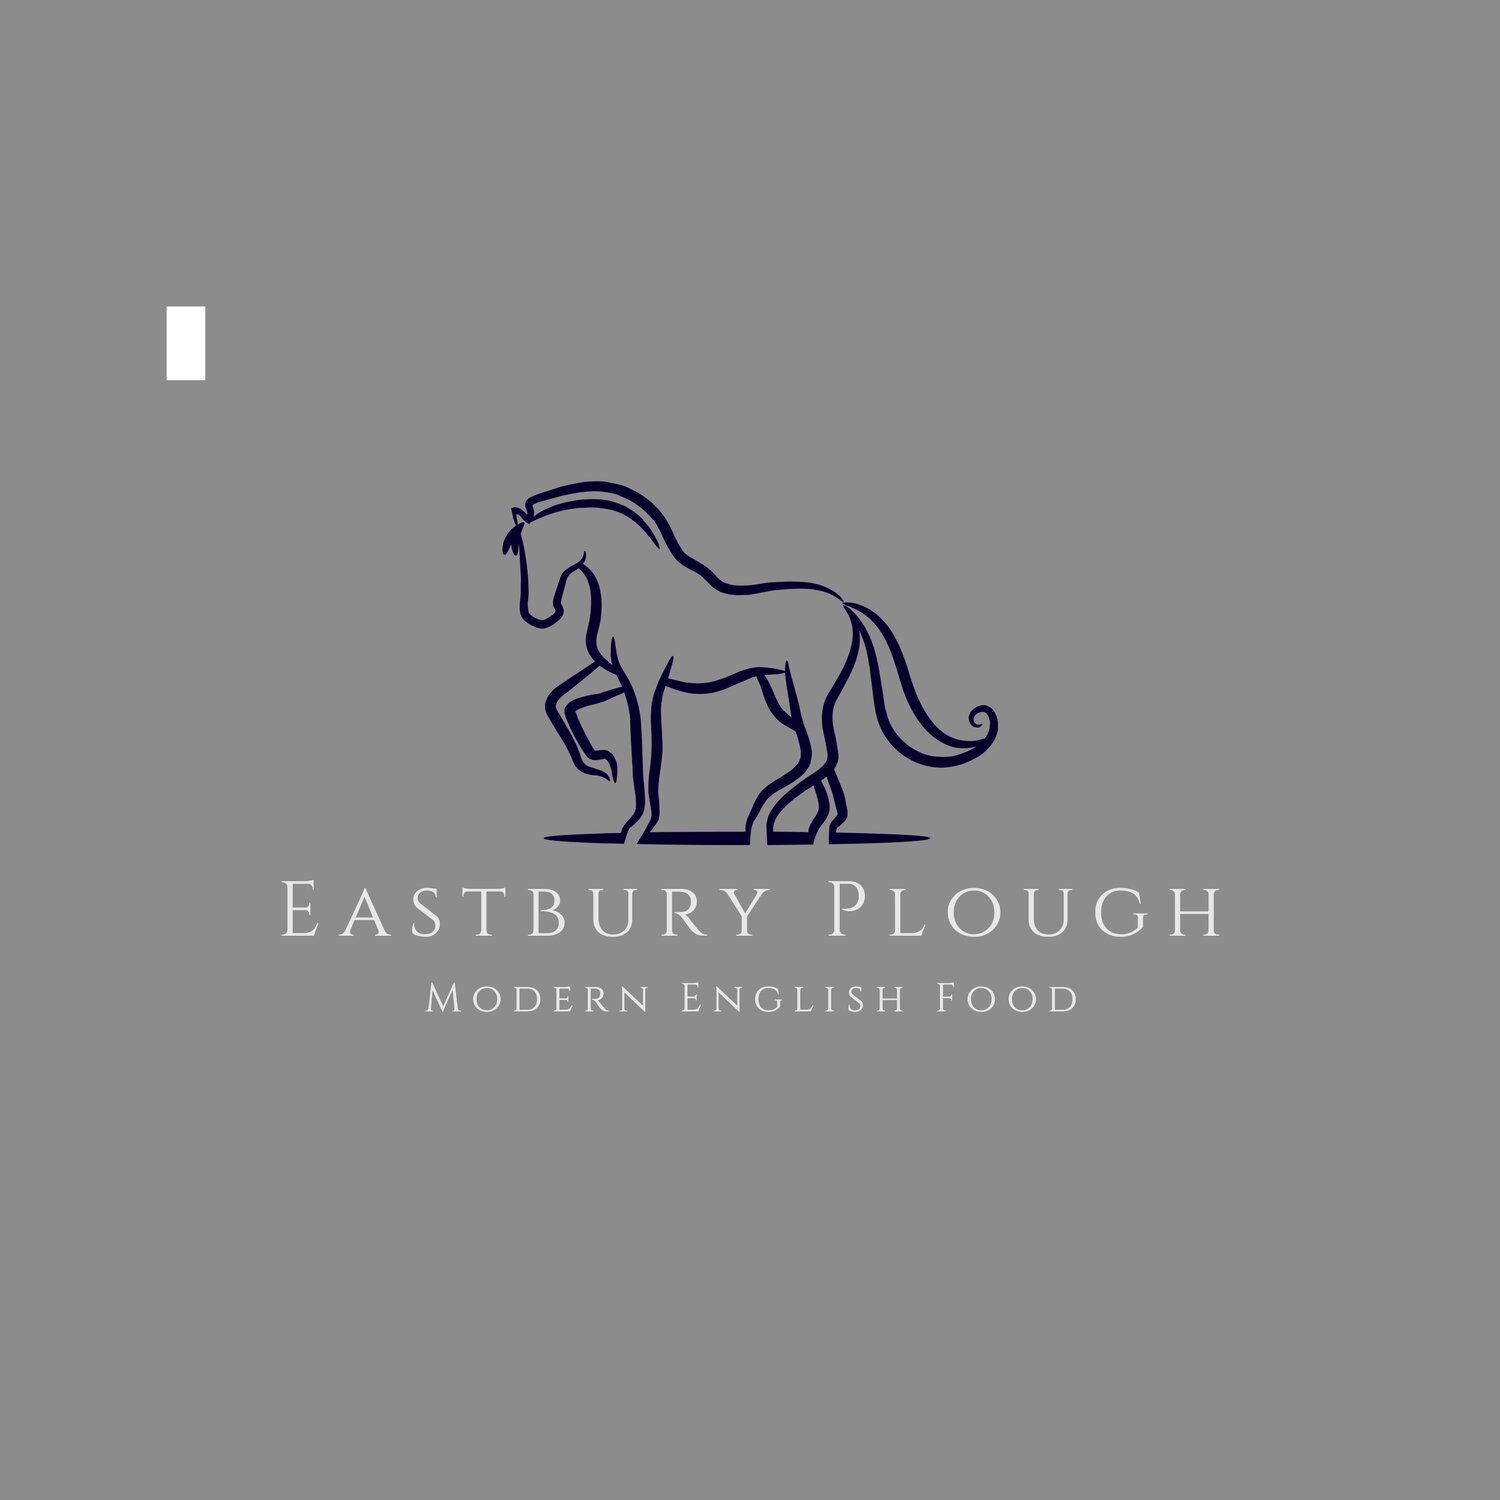 The Eastbury Plough